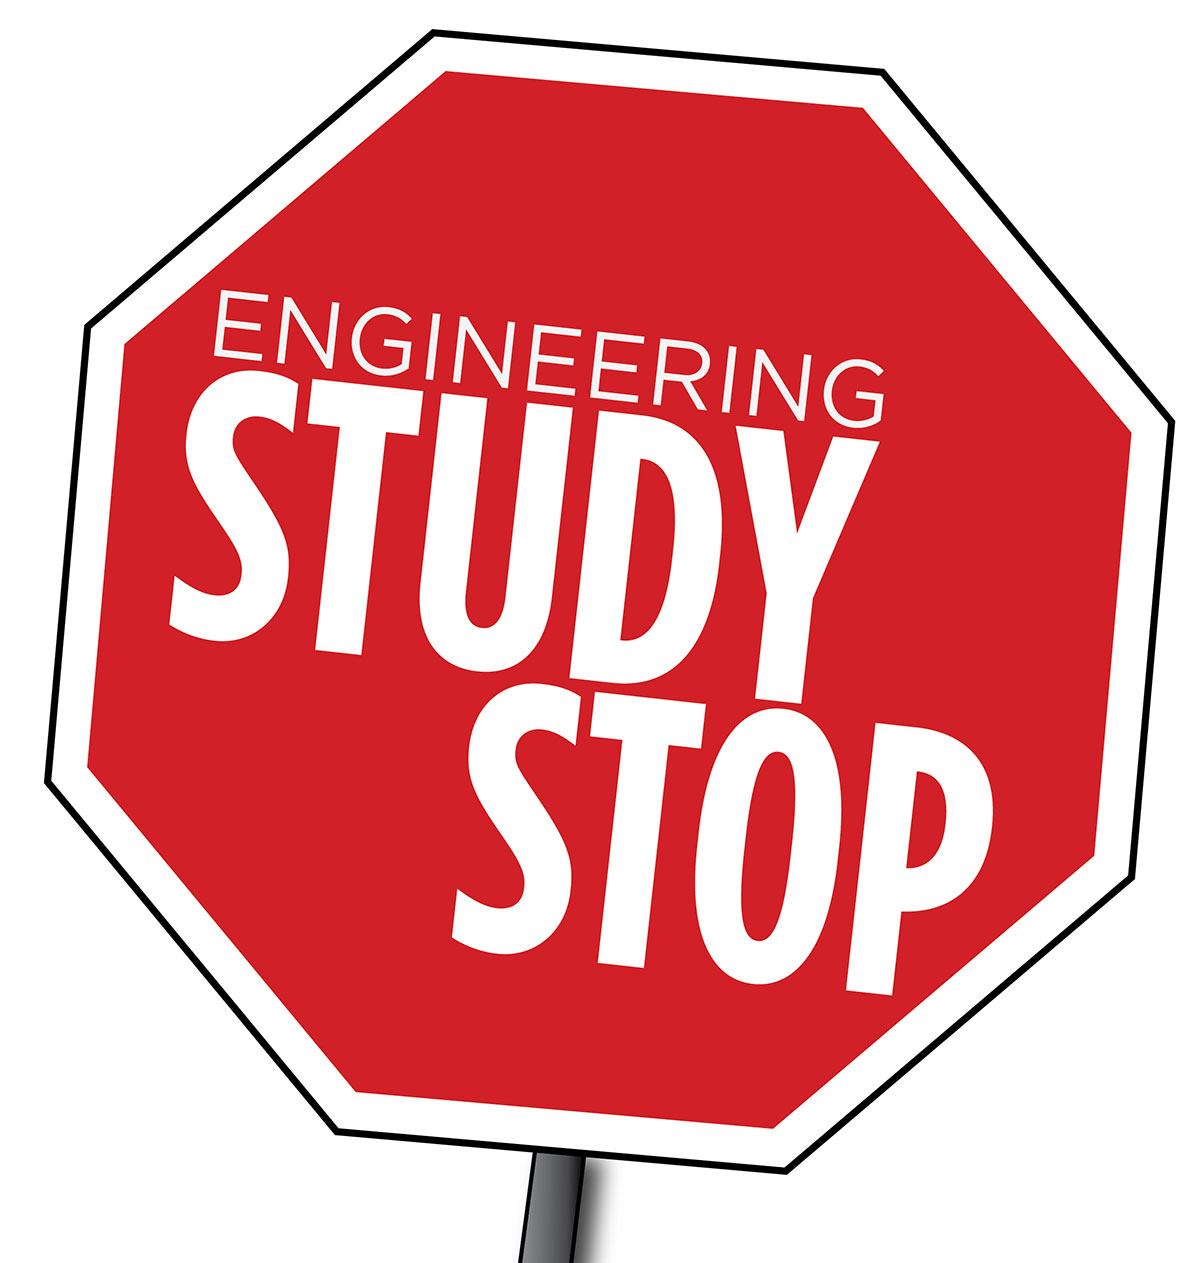 Engineering Study Stop each Monday-Thursday night